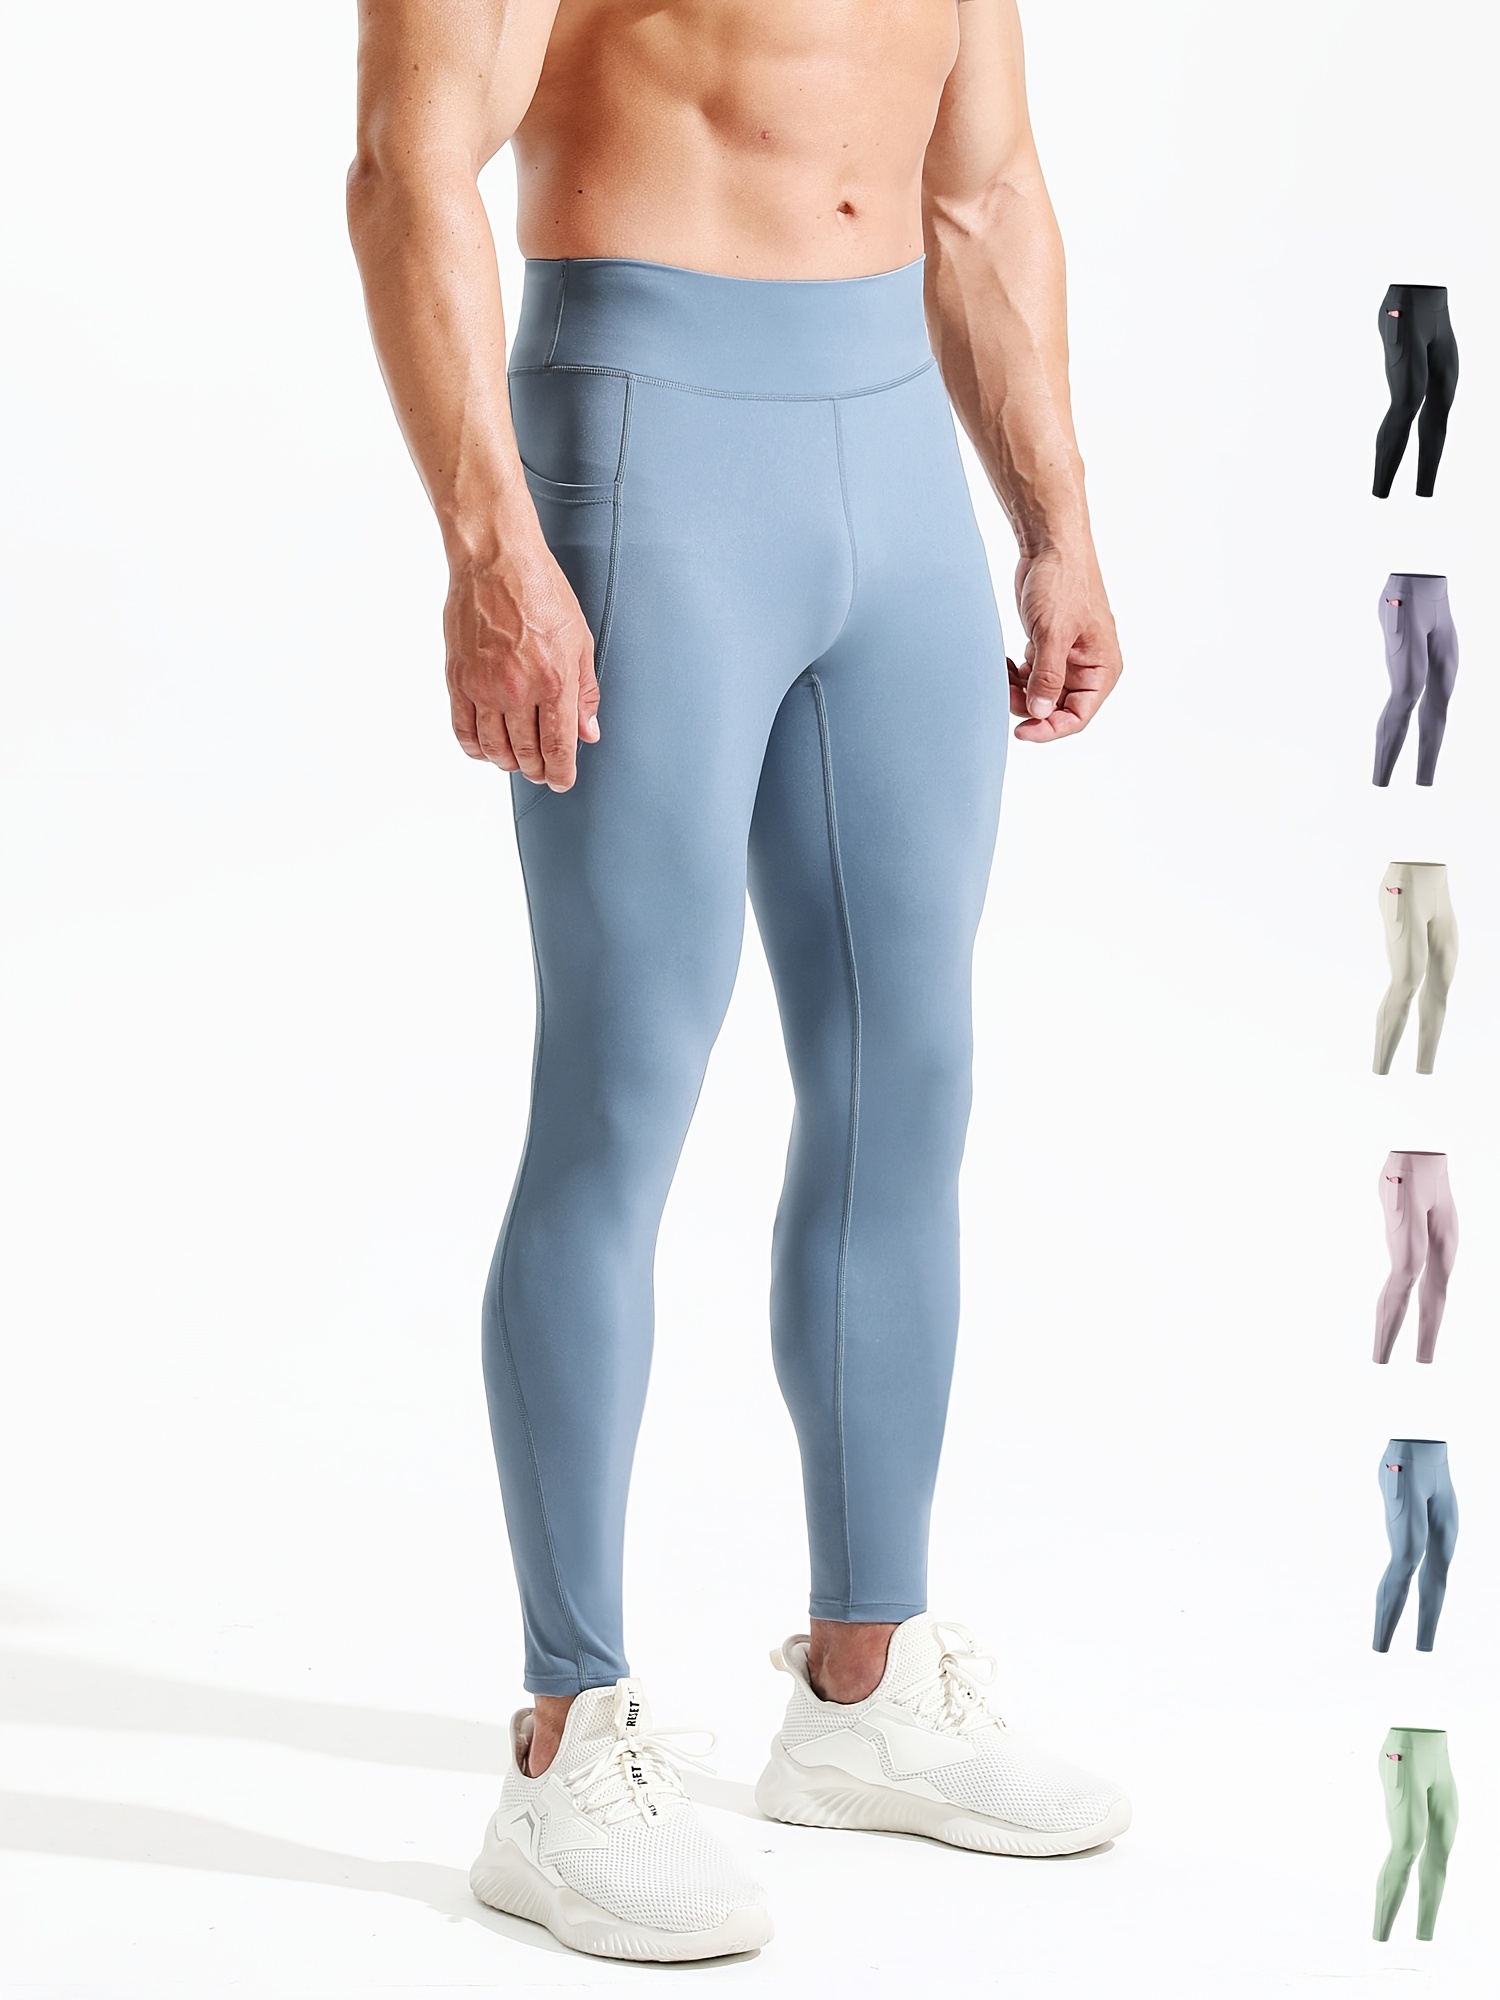 Hicarer 6 Pack Men's Compression Pants Workout Pants Athletic Compression  Leggings Running Tights for Men Sport Supplies Multicolor Large